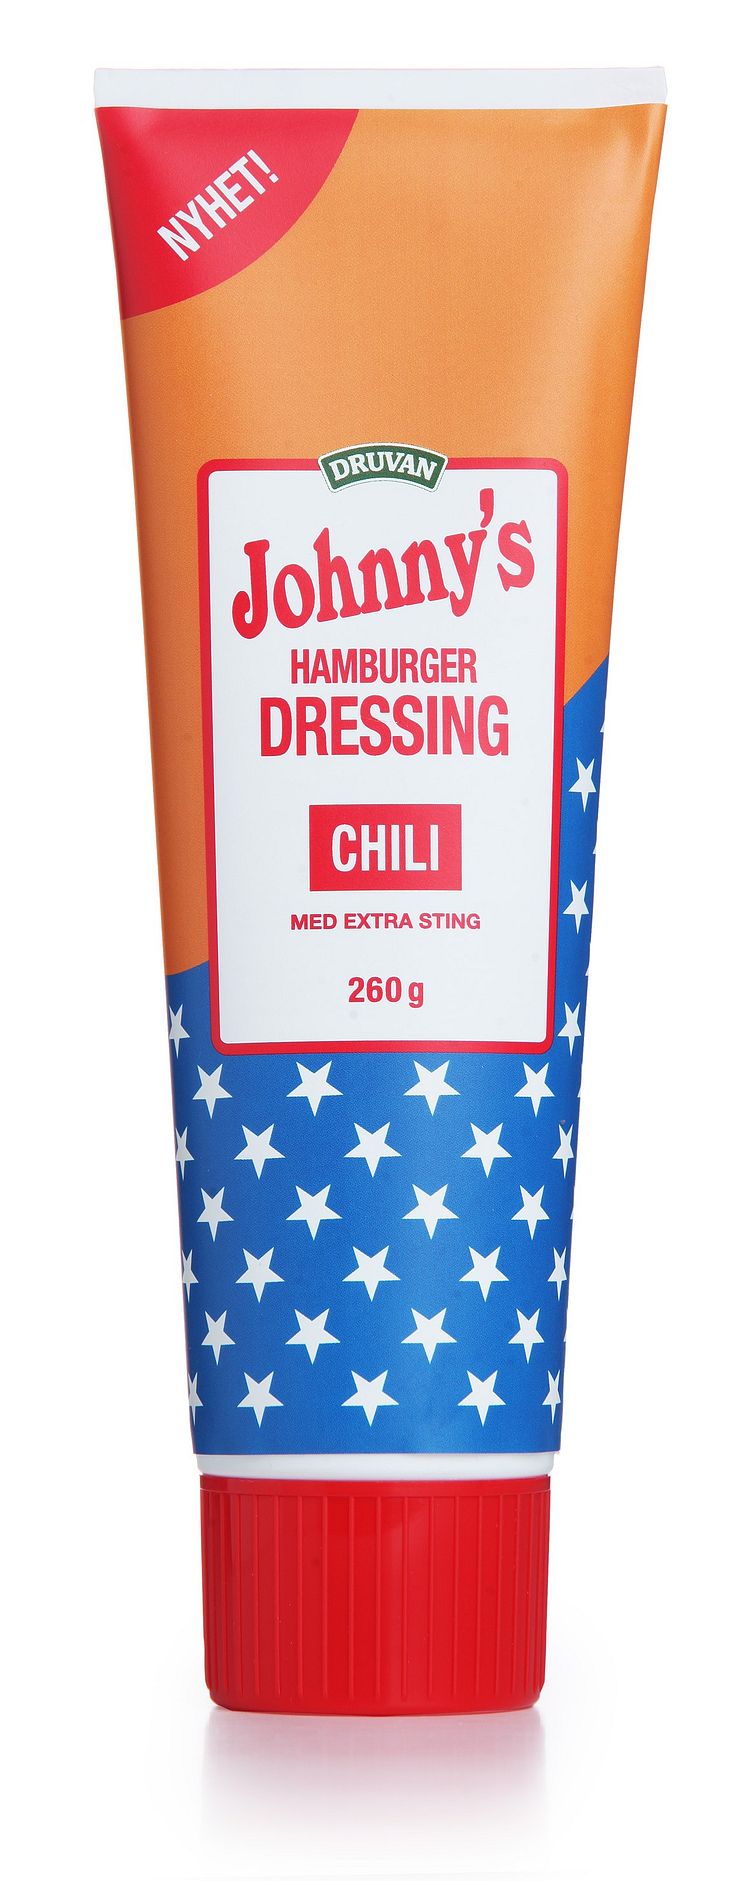 Johnny's Hamburgerdressing Chili 260g